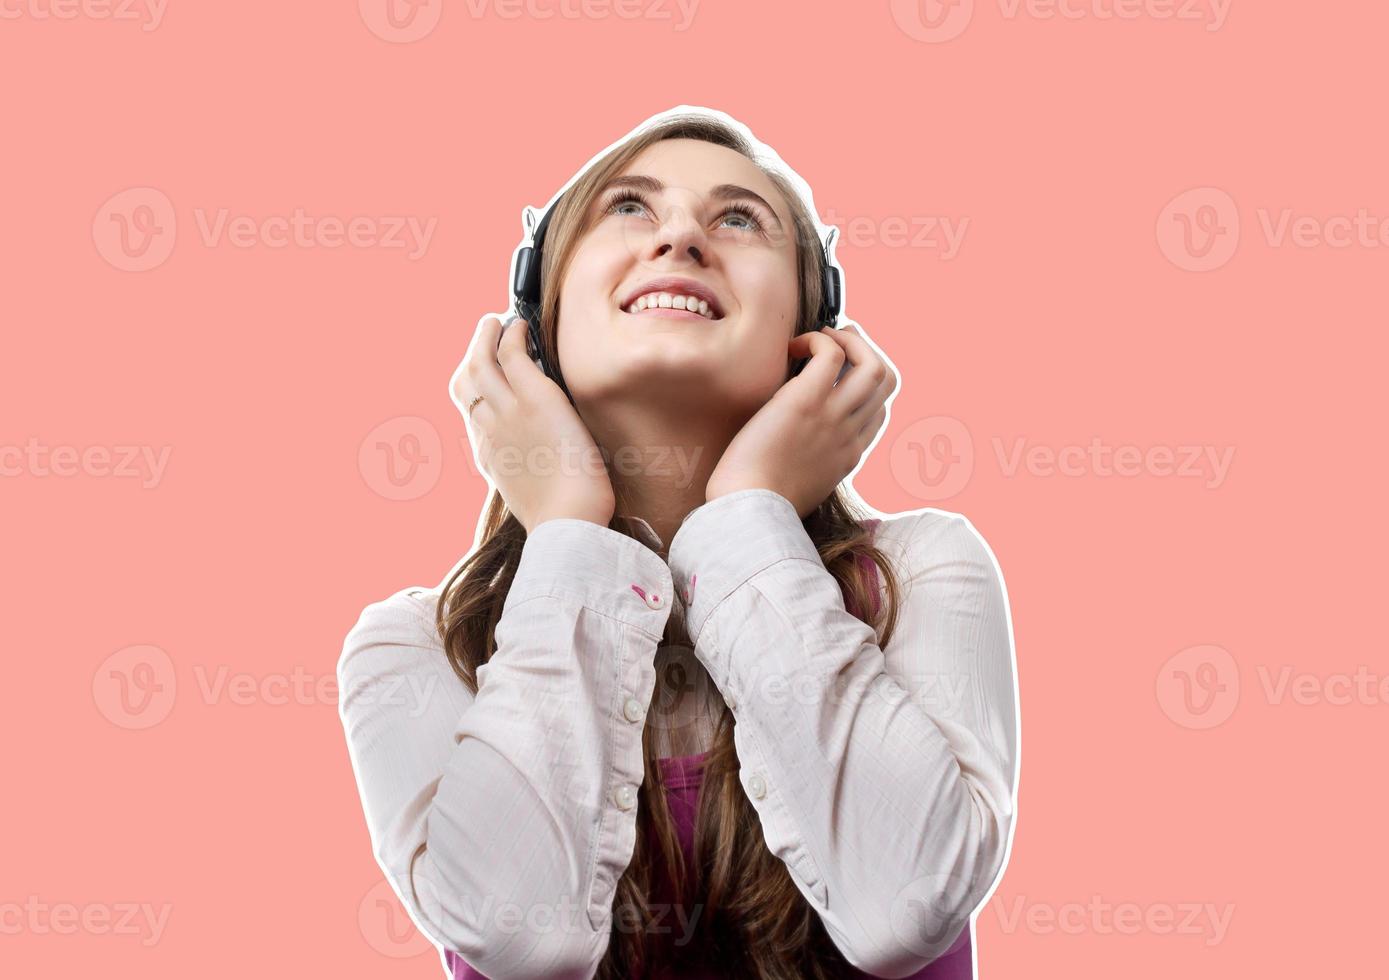 Mädchen, das Musik über Kopfhörer hört foto